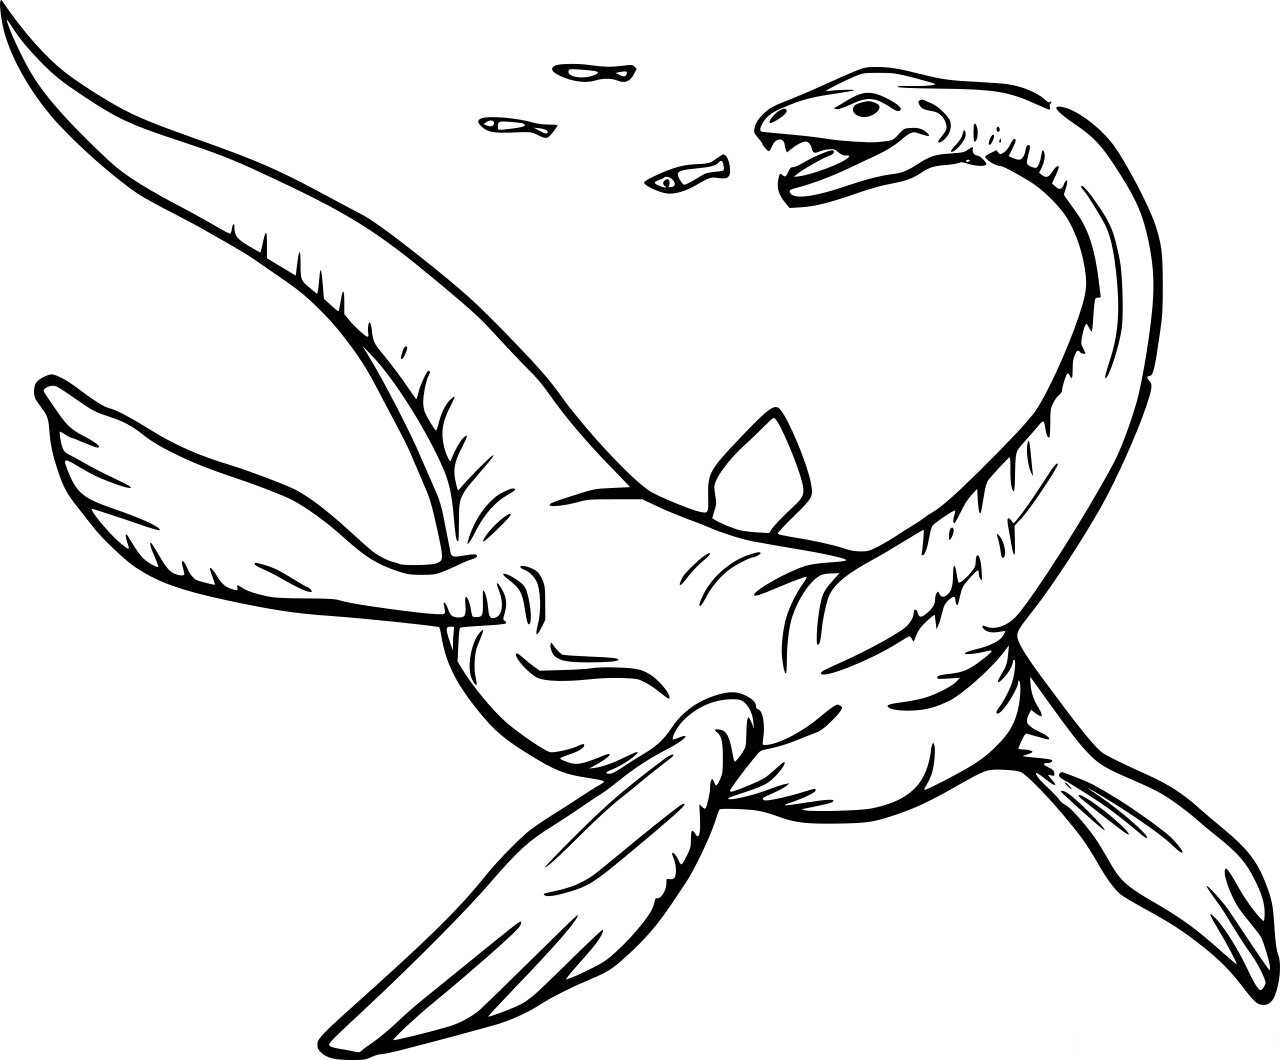 Plesiosaurus Dinosaur eating fish Coloring Page